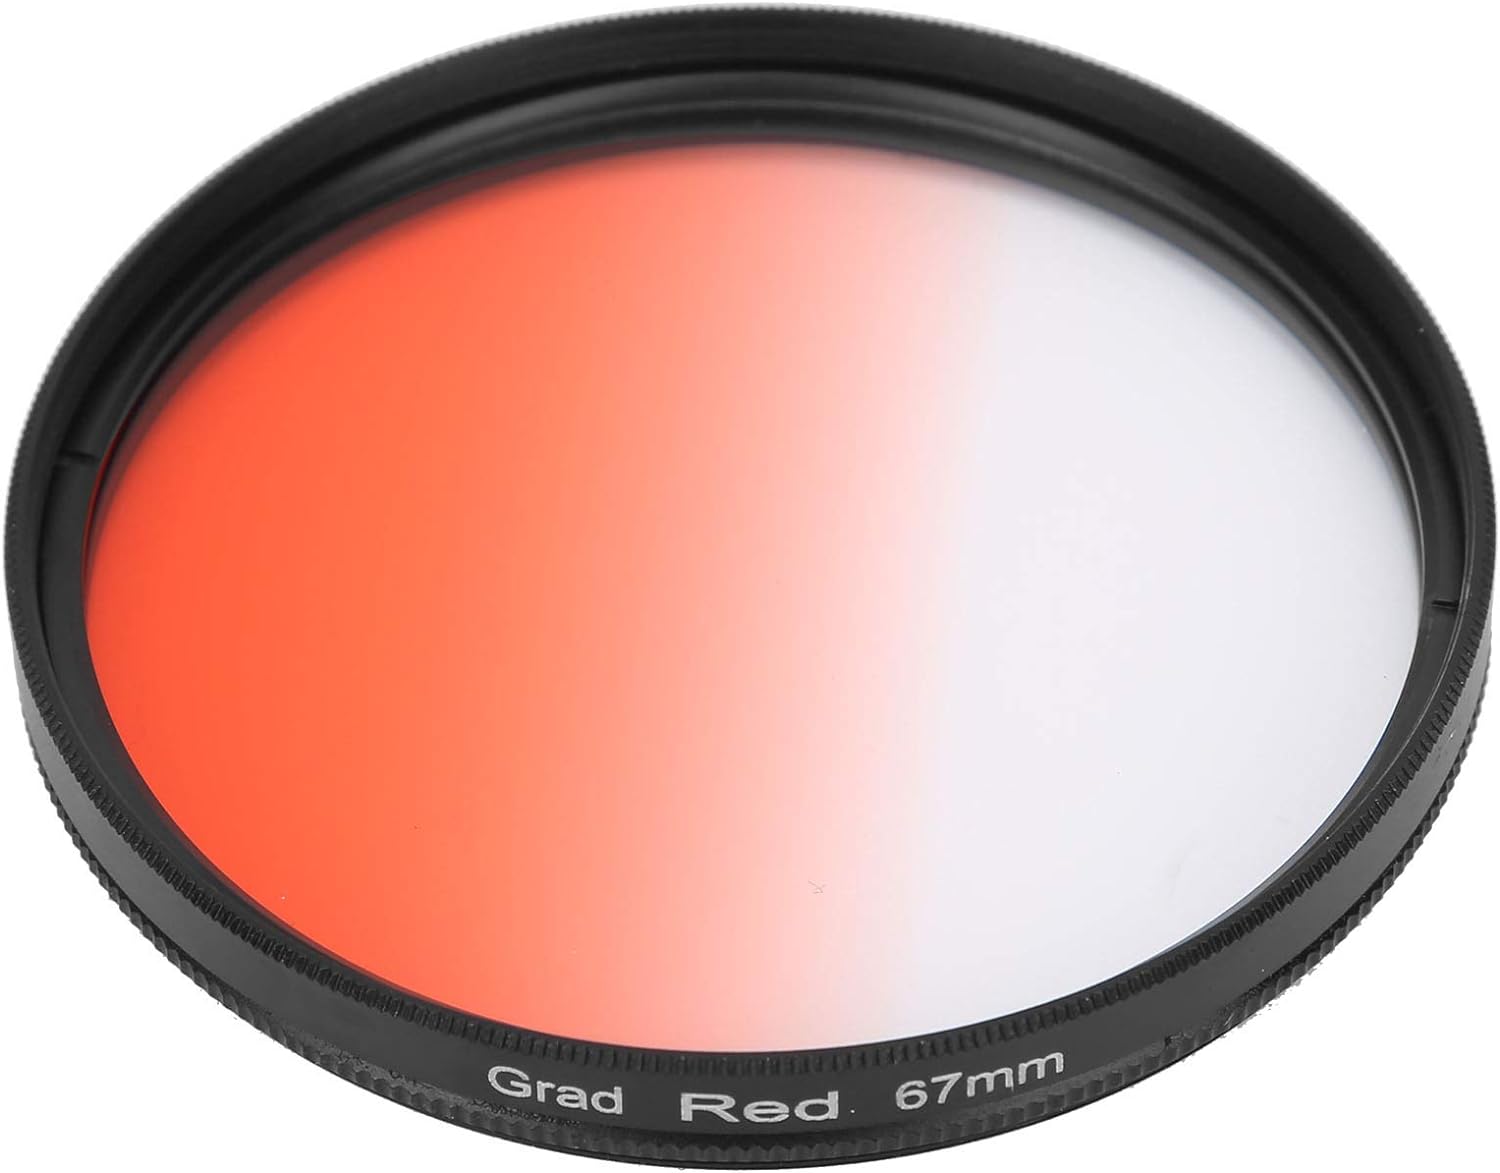 The Art of Subtle Color Enhancements: Gradual Red Lens Filters